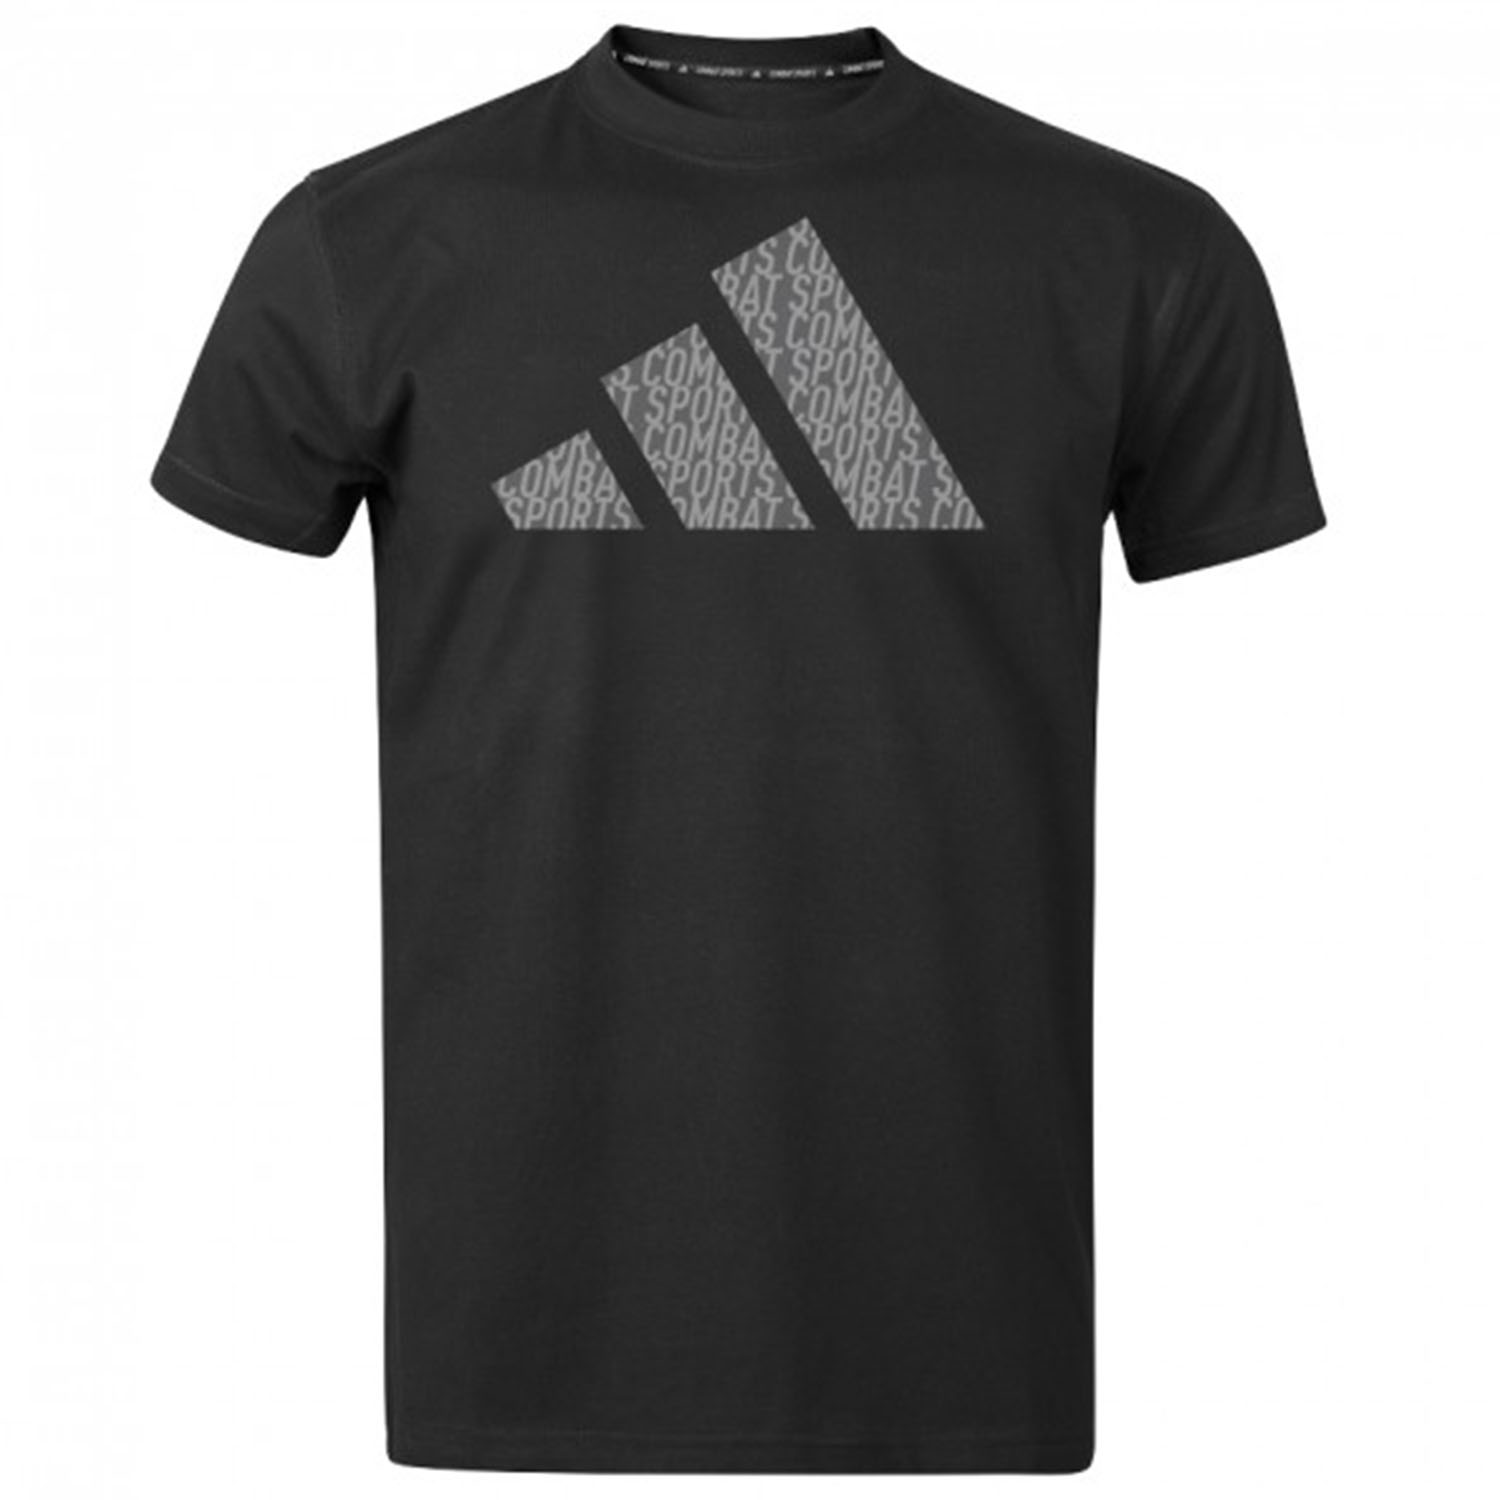 adidas T-Shirt, Perfo Script Graphic Combat Sports, black